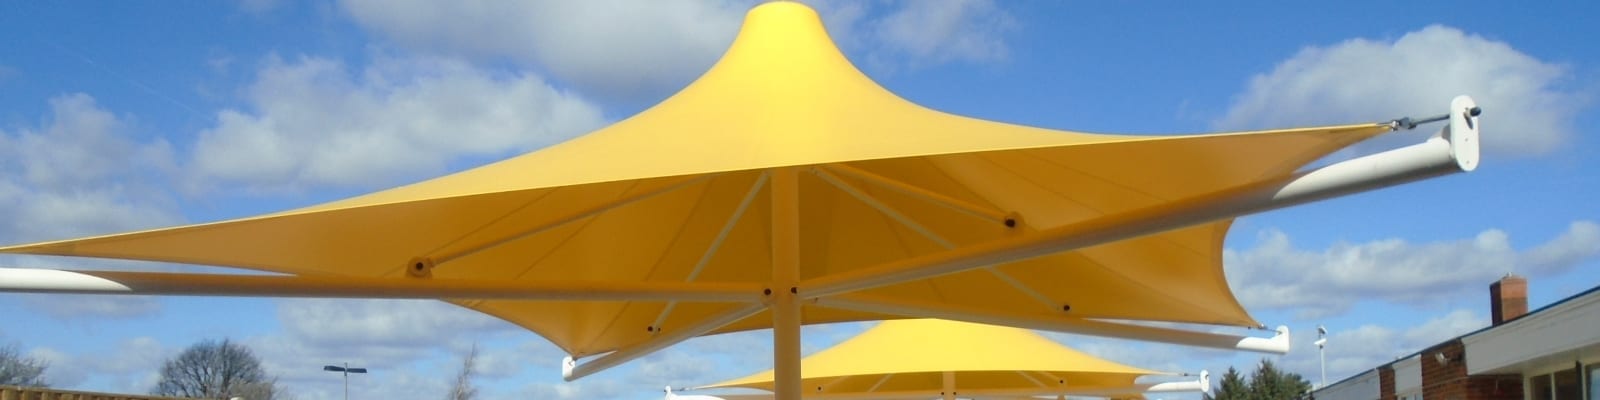 Godalming College Yellow Umbrella Canopy